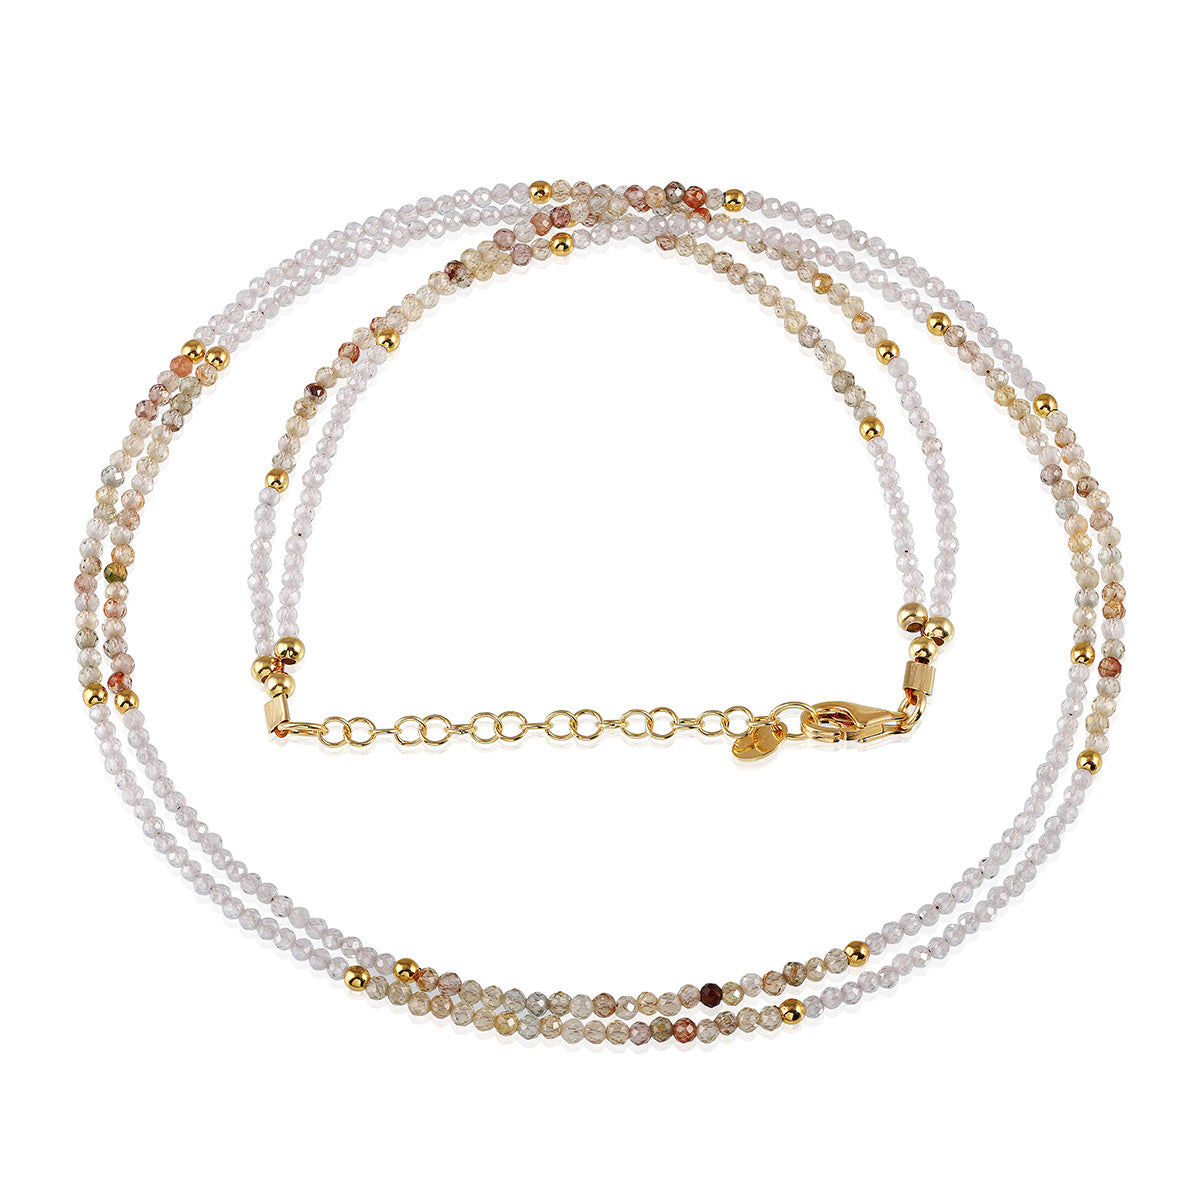 Elegant Handmade Silver Necklace with Zircon and Hematite